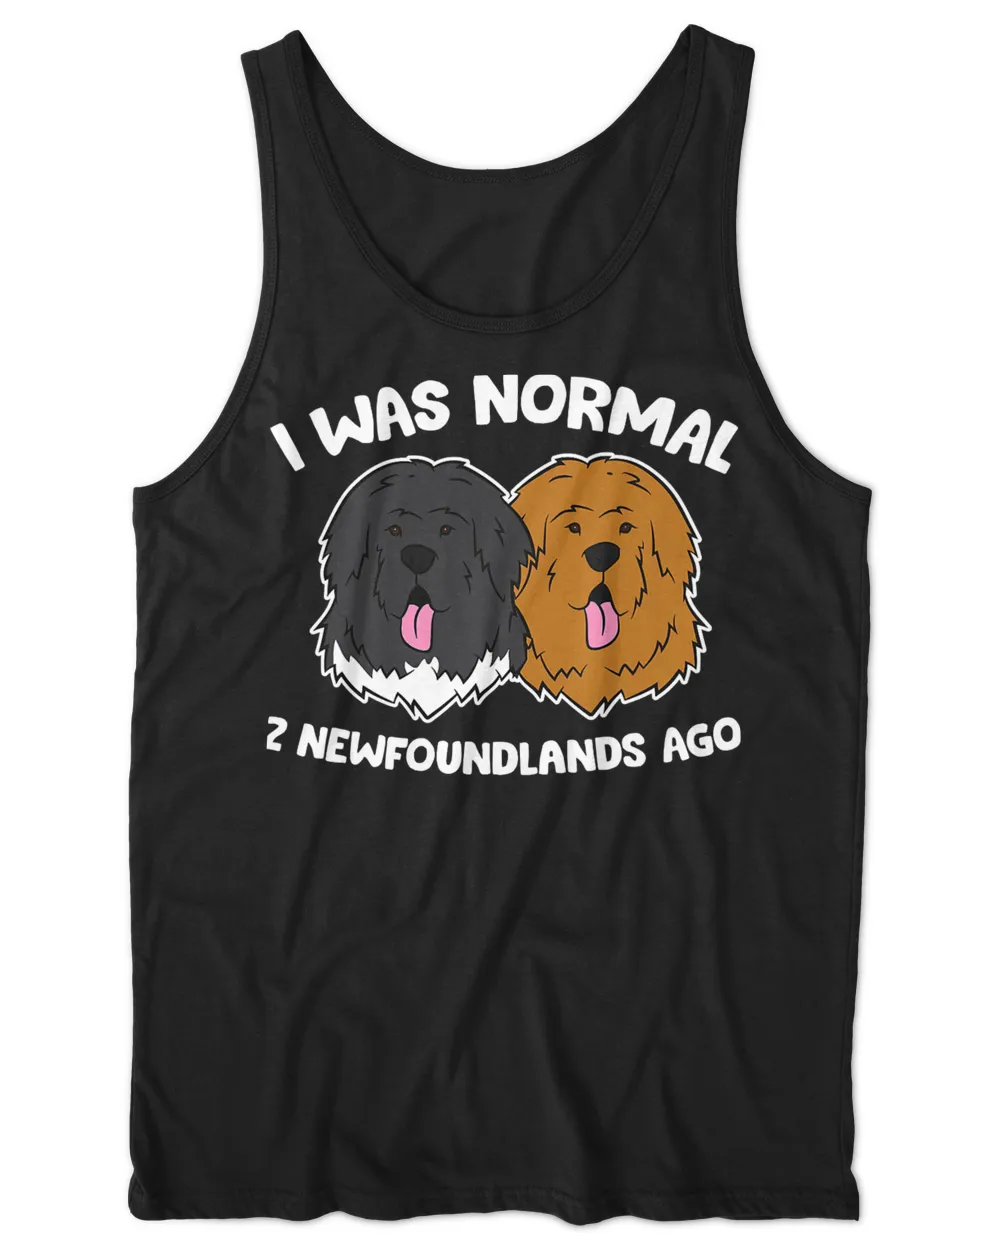 I Was Normal 2 Newfoundland Dogs Ago T-Shirt